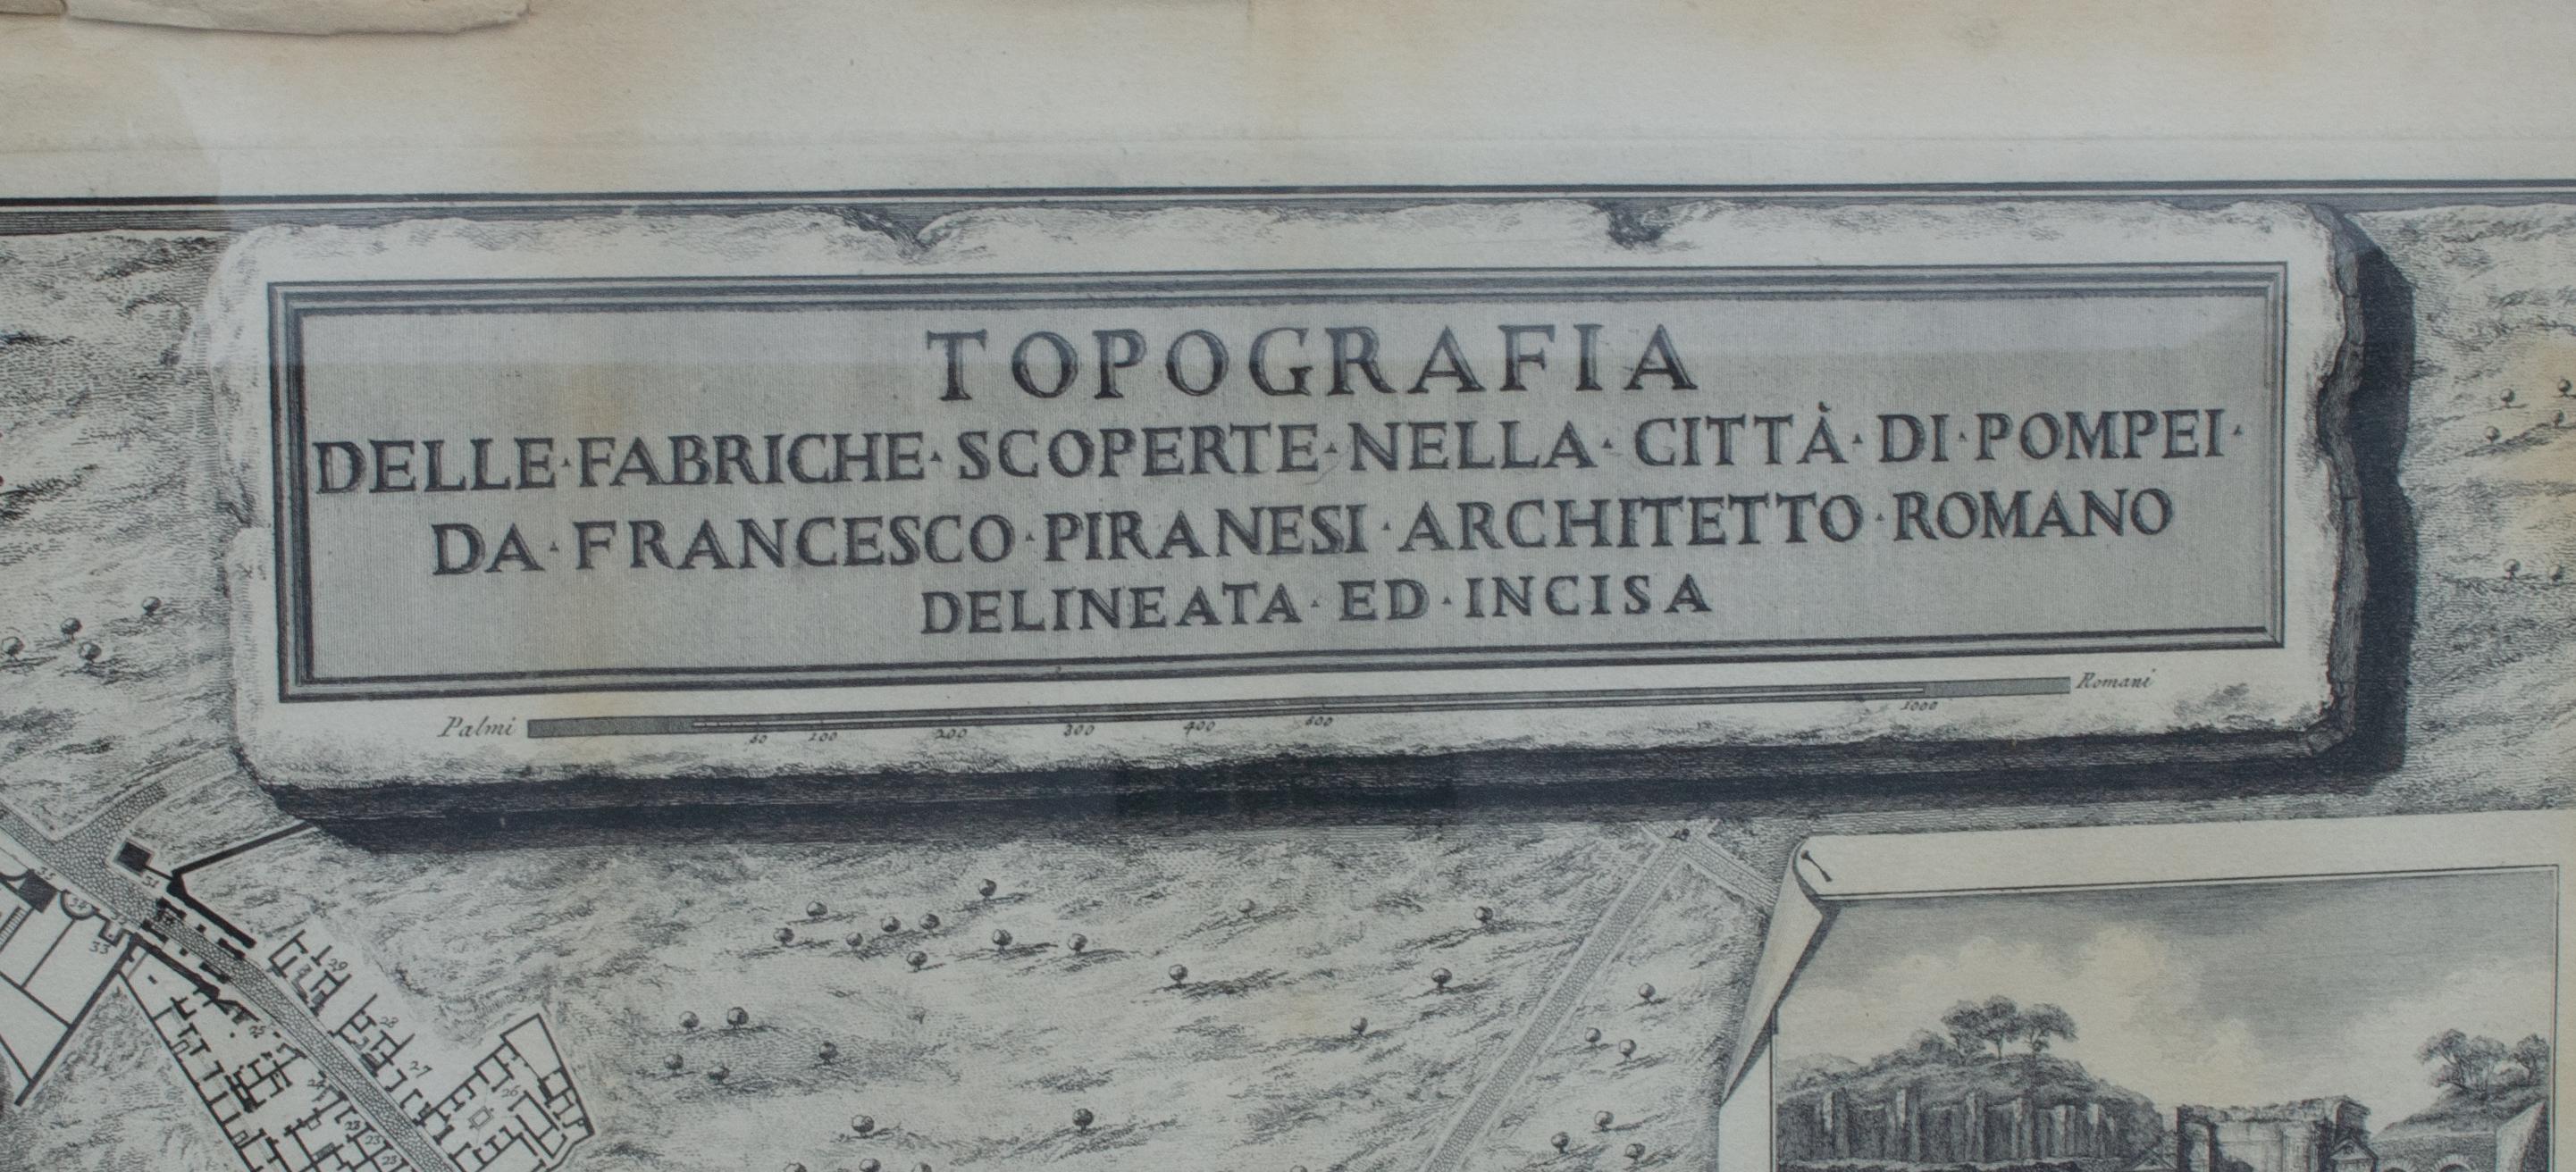 Francesco Piranesi (Italian, 1758-1810)
Topographical Map of Pompeii
Originally executed 1785, modern reprint (likely 20th Century)
Engraving
Framed: 48 1/4 x 26 3/8 x 1 1/2 in.

Francesco Piranesi's father, Giovanni Battista Piranesi, is recognized